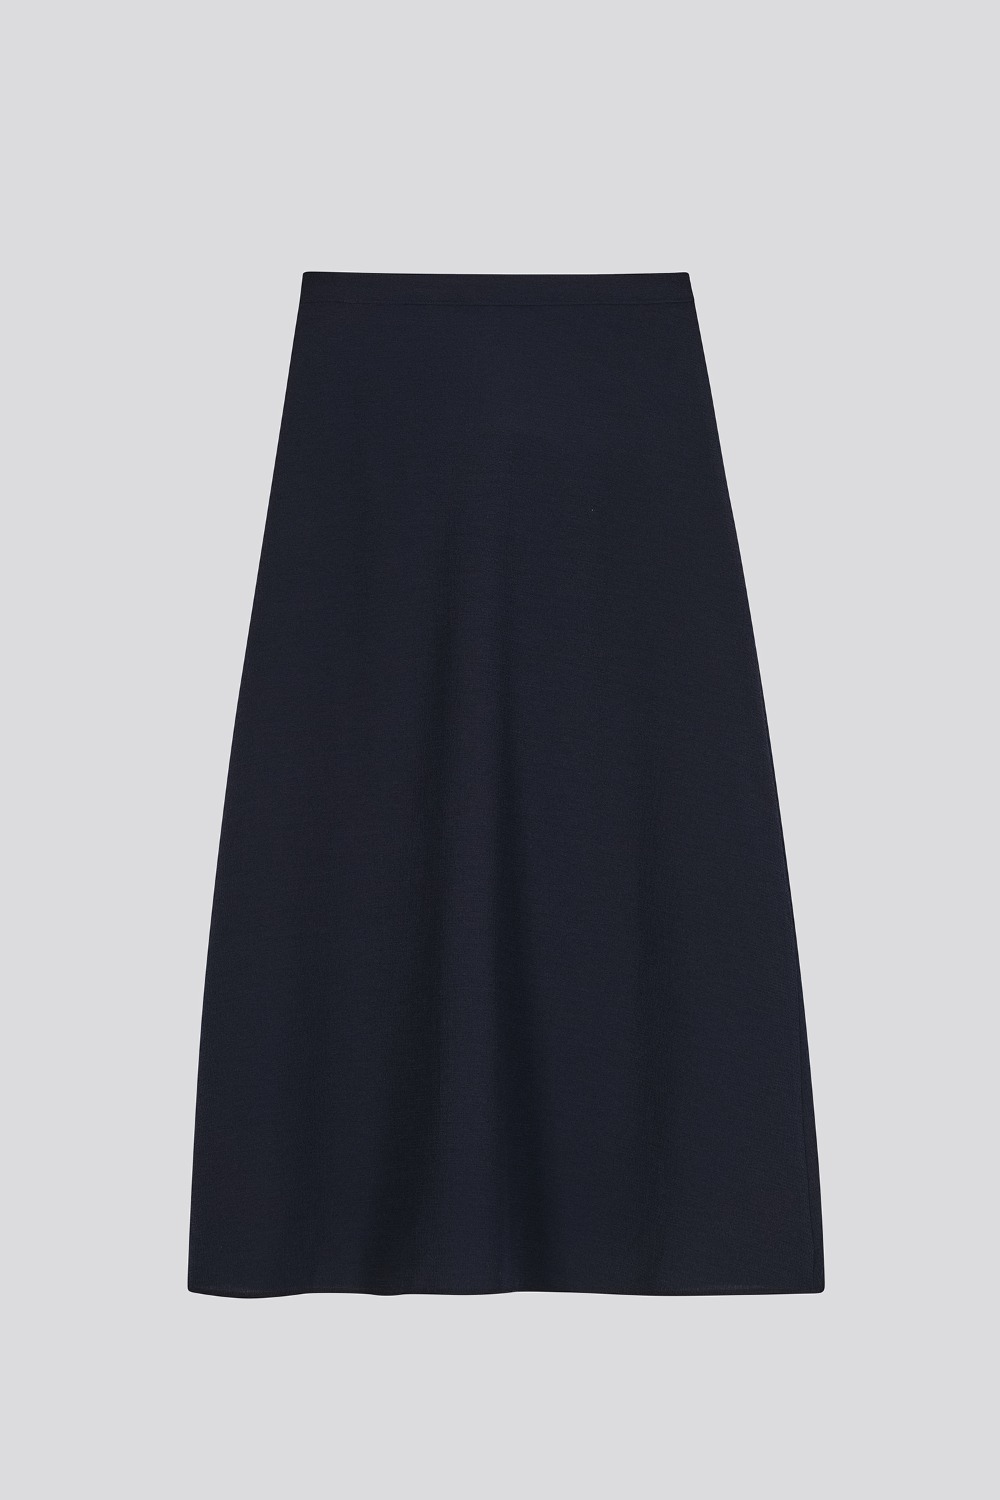 Breeze skirt [2 colors]